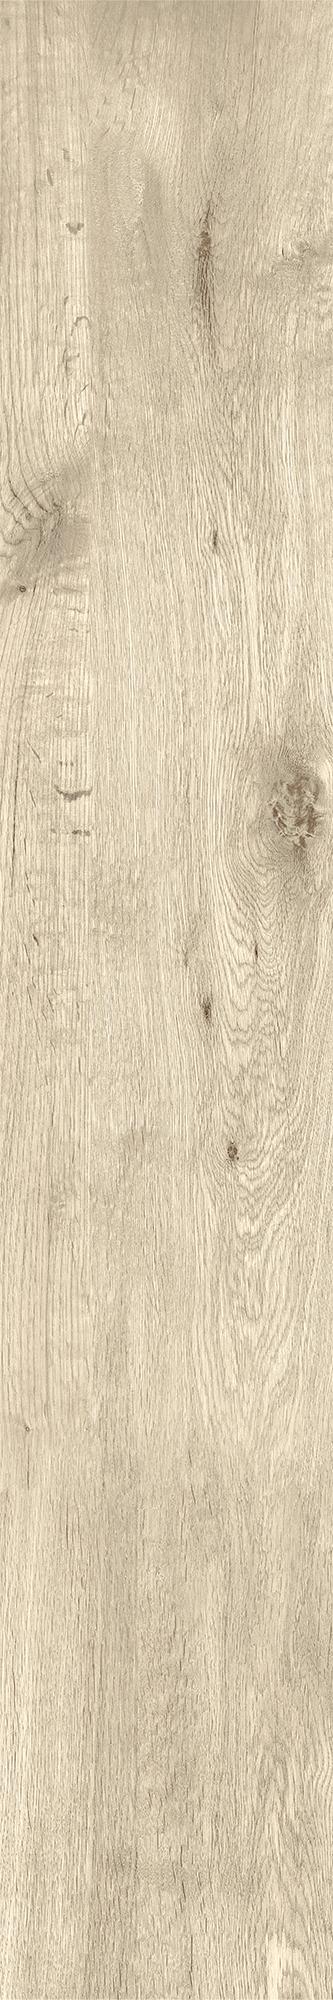 Alpina Wood 900*150*10 891190 MR Бежевый 51,84кв.м